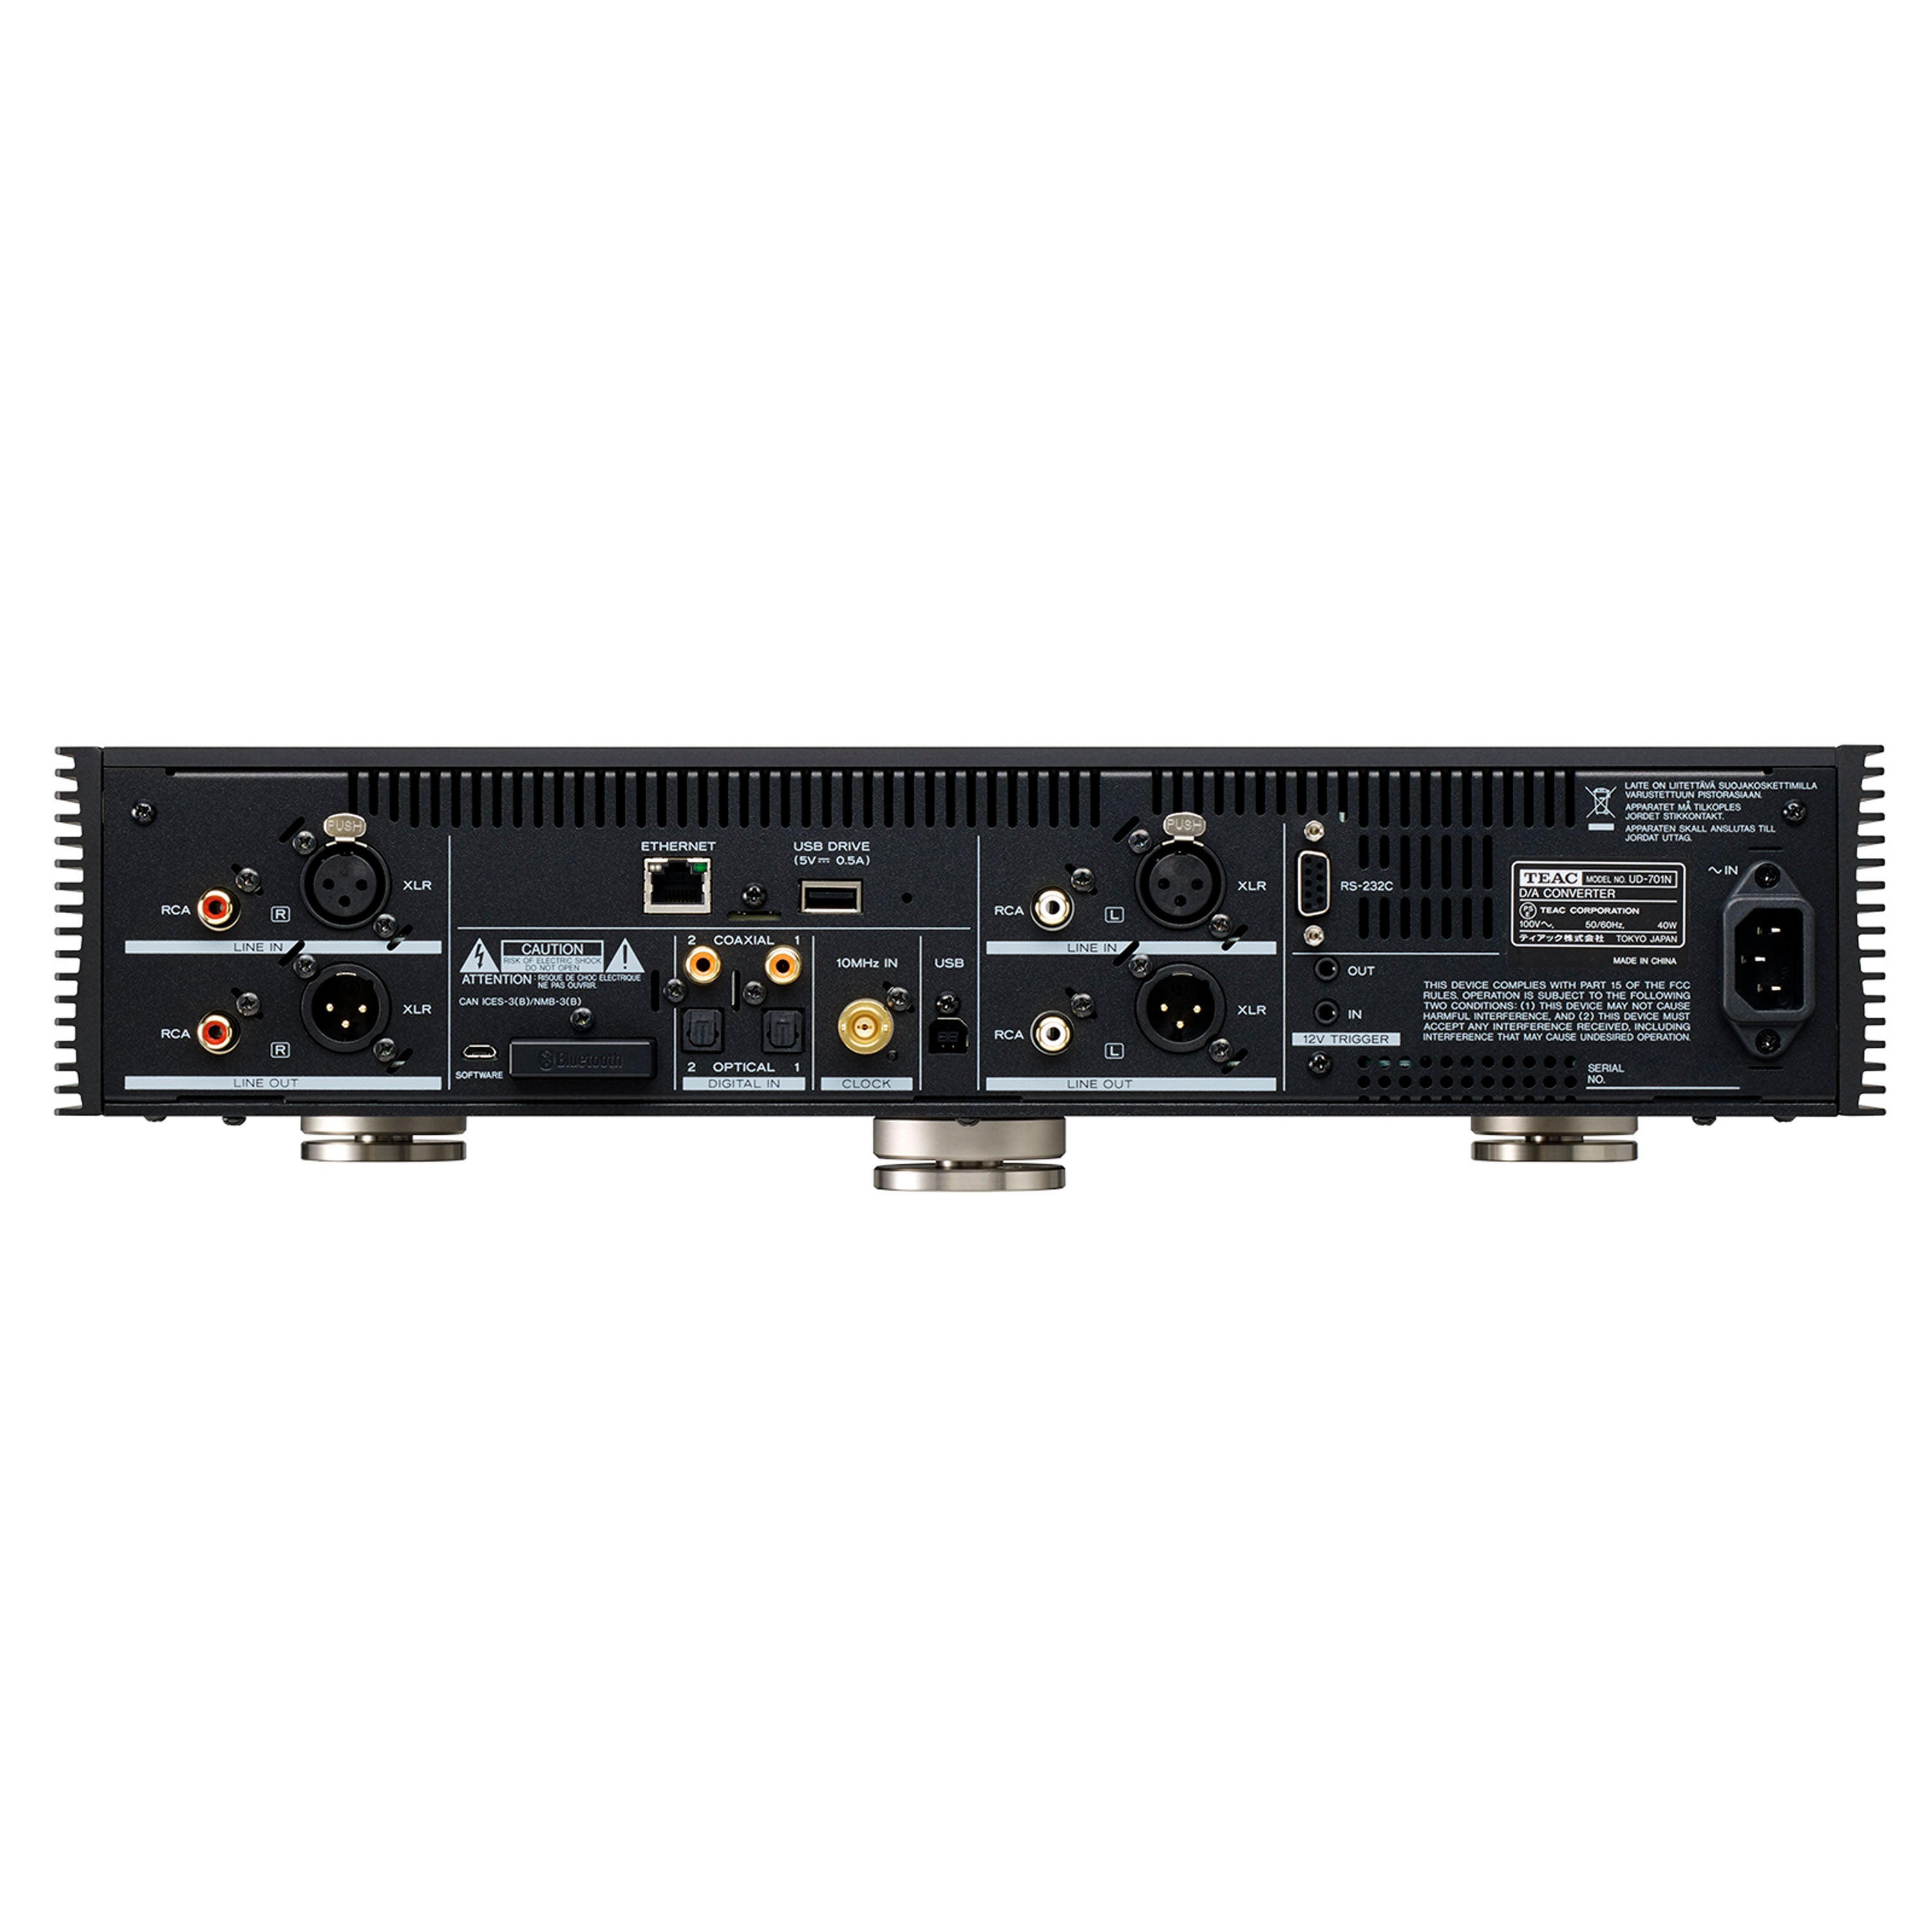 TEAC UD-701N USB DAC and Network Player (black)